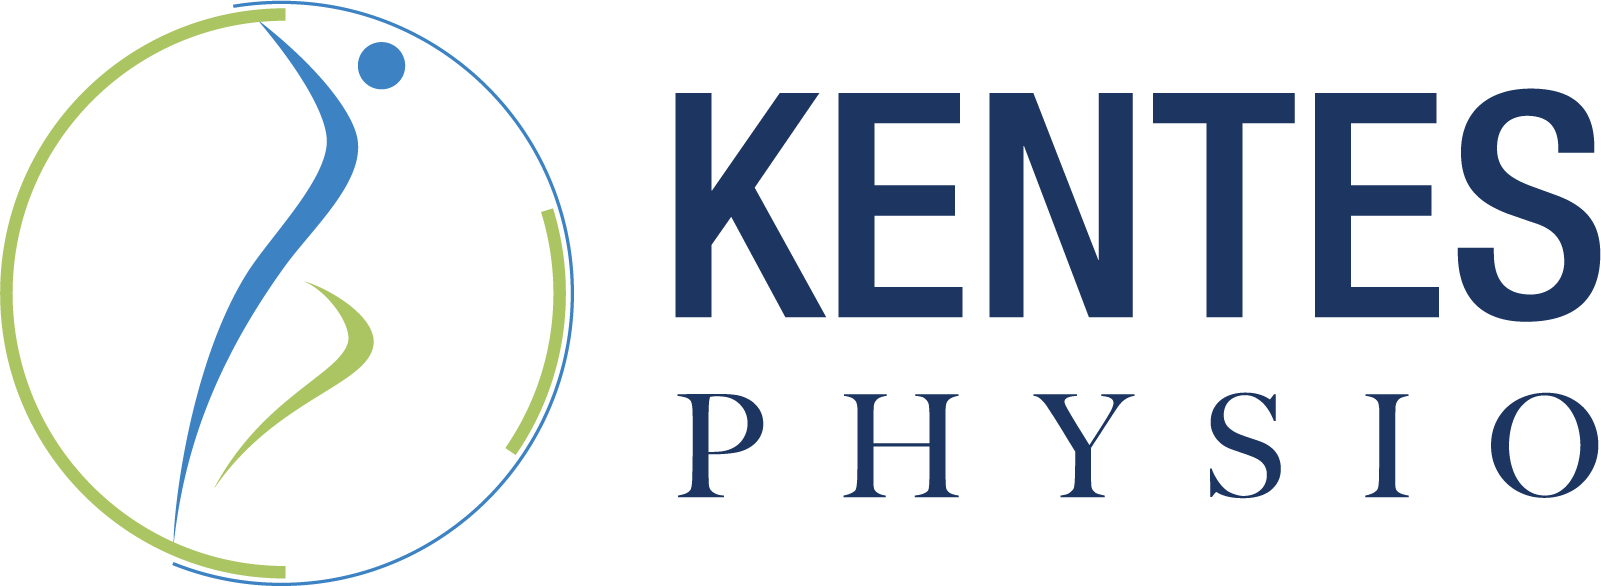 physiotherpay logo